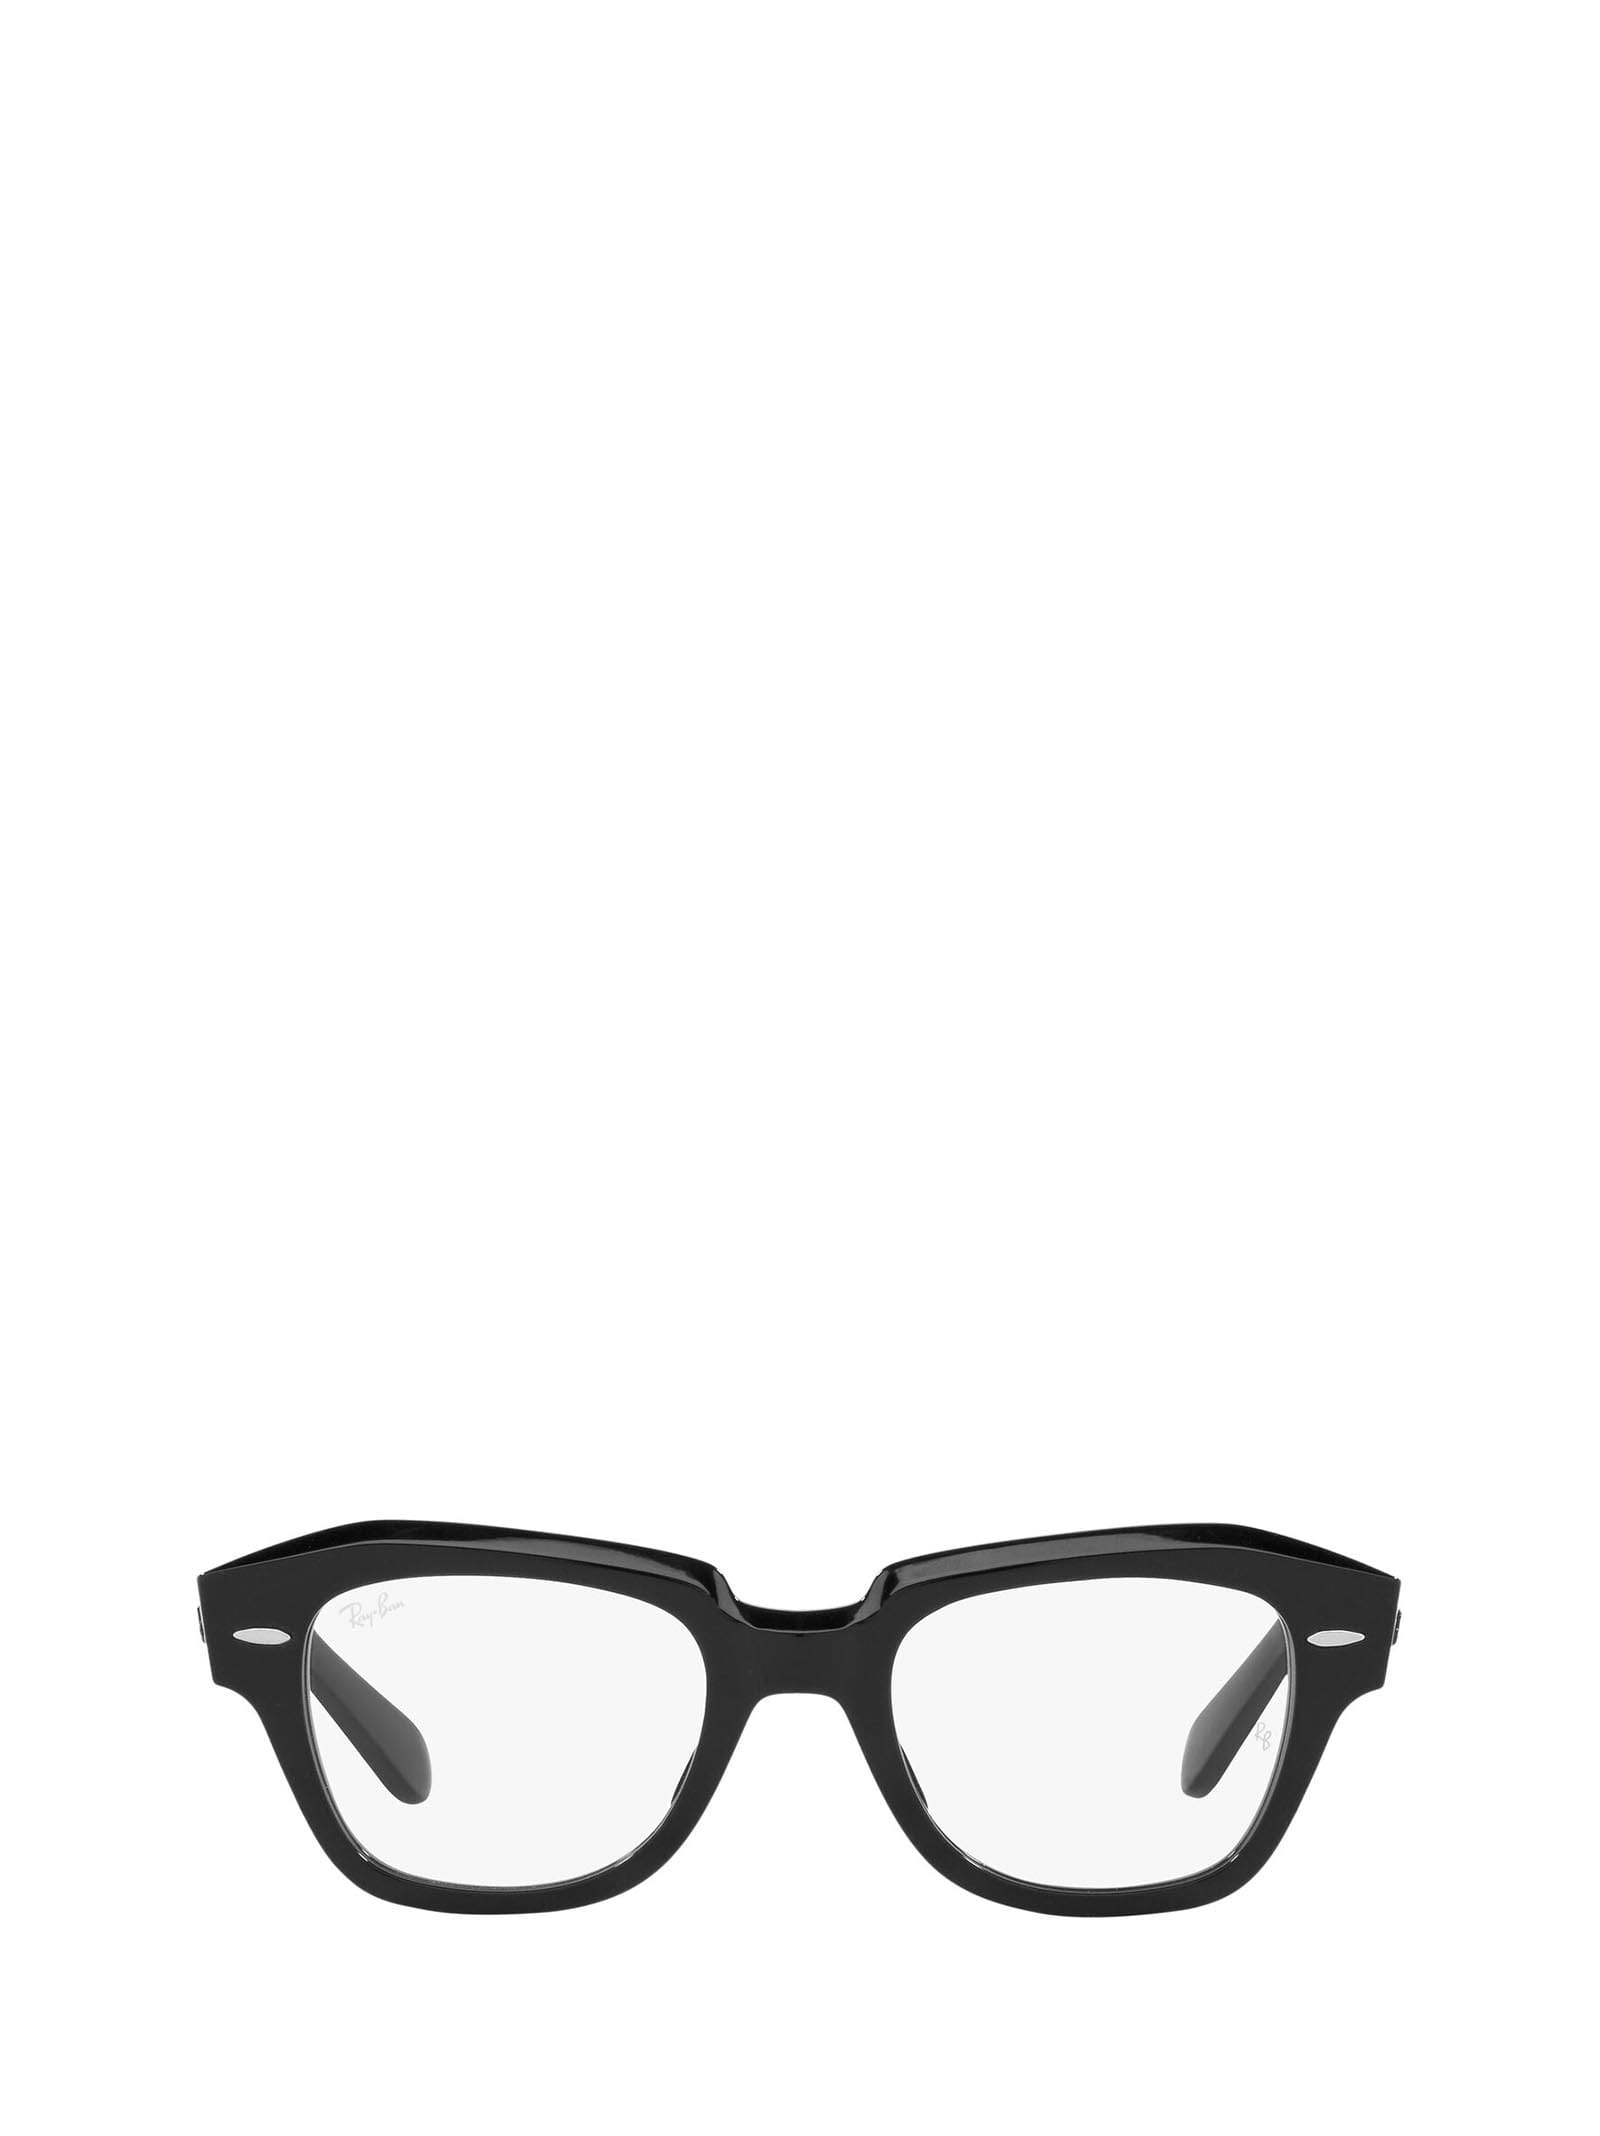 Ray Ban Rx5486 Black Glasses